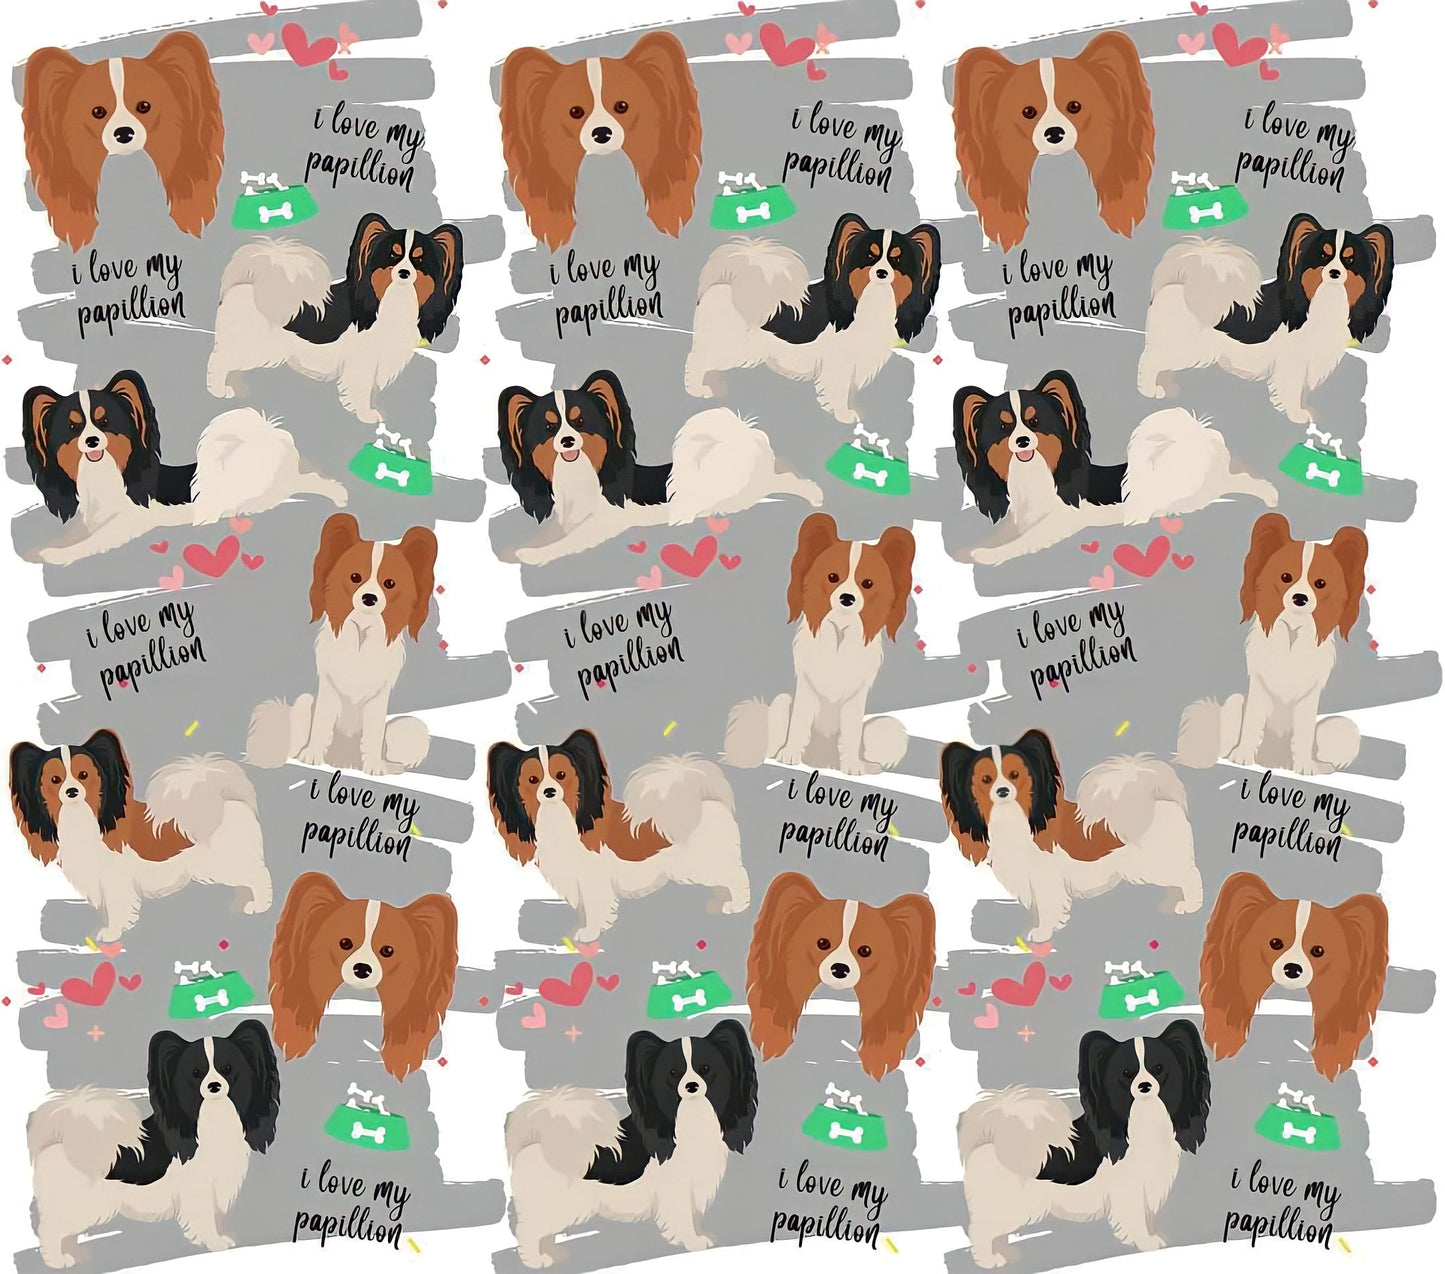 Papillion Appreciation - Cartoon - "I Love My Papillion" - Assorted Colored Dogs w/ Grey Background - 20 Oz Sublimation Transfer